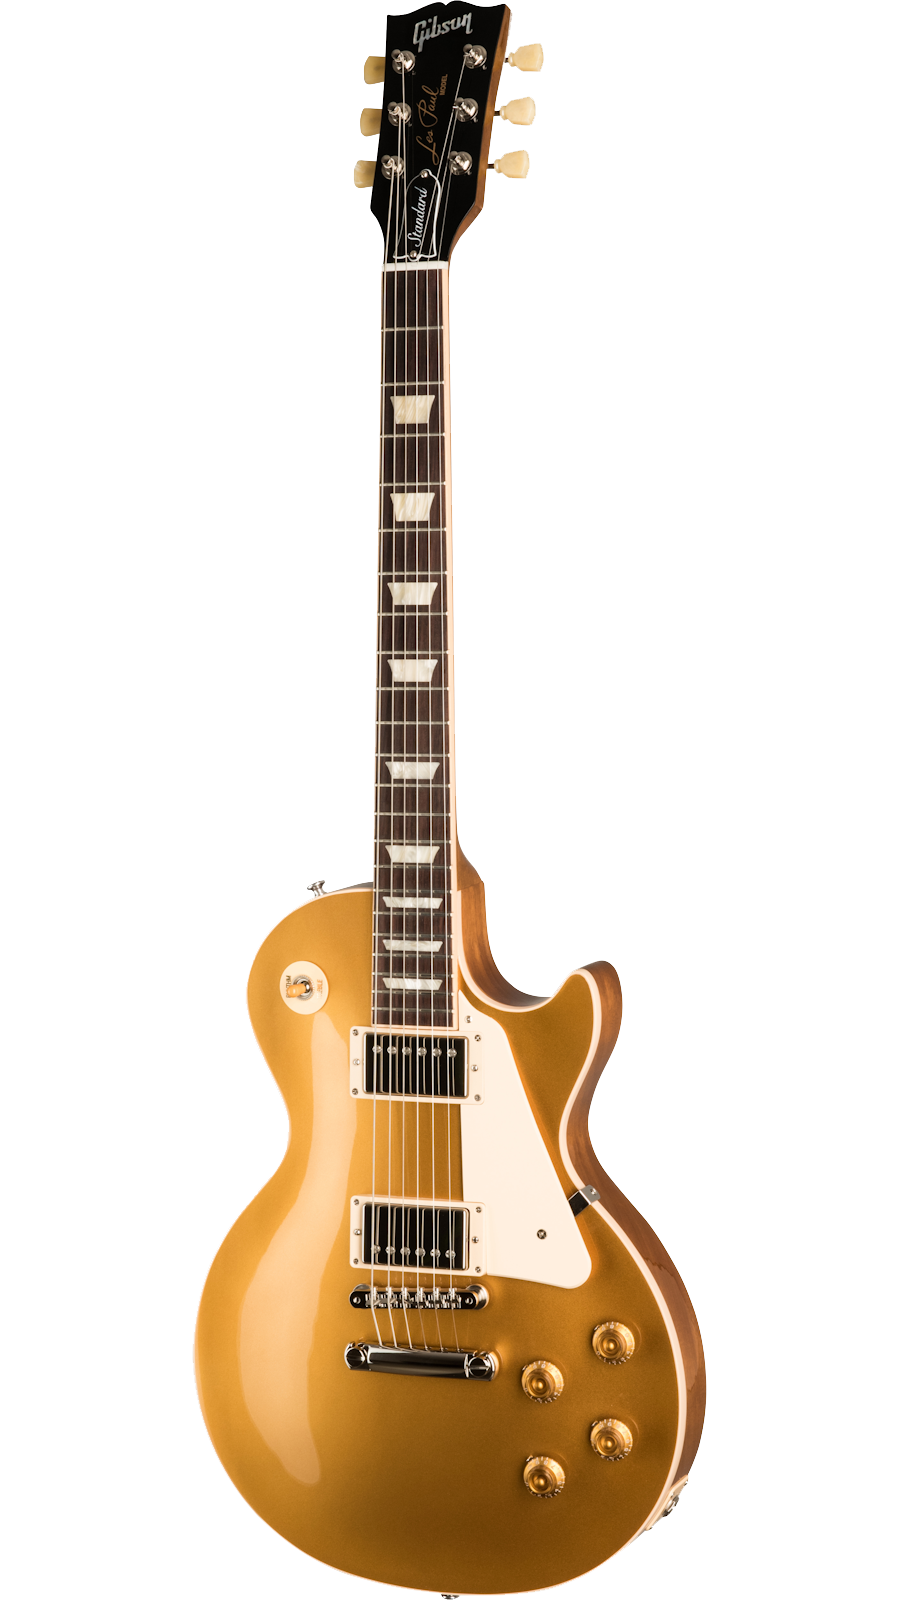 Gibson Les Paul Standard electric guitar with Gold color Tone Shop Guitars Dallas TX